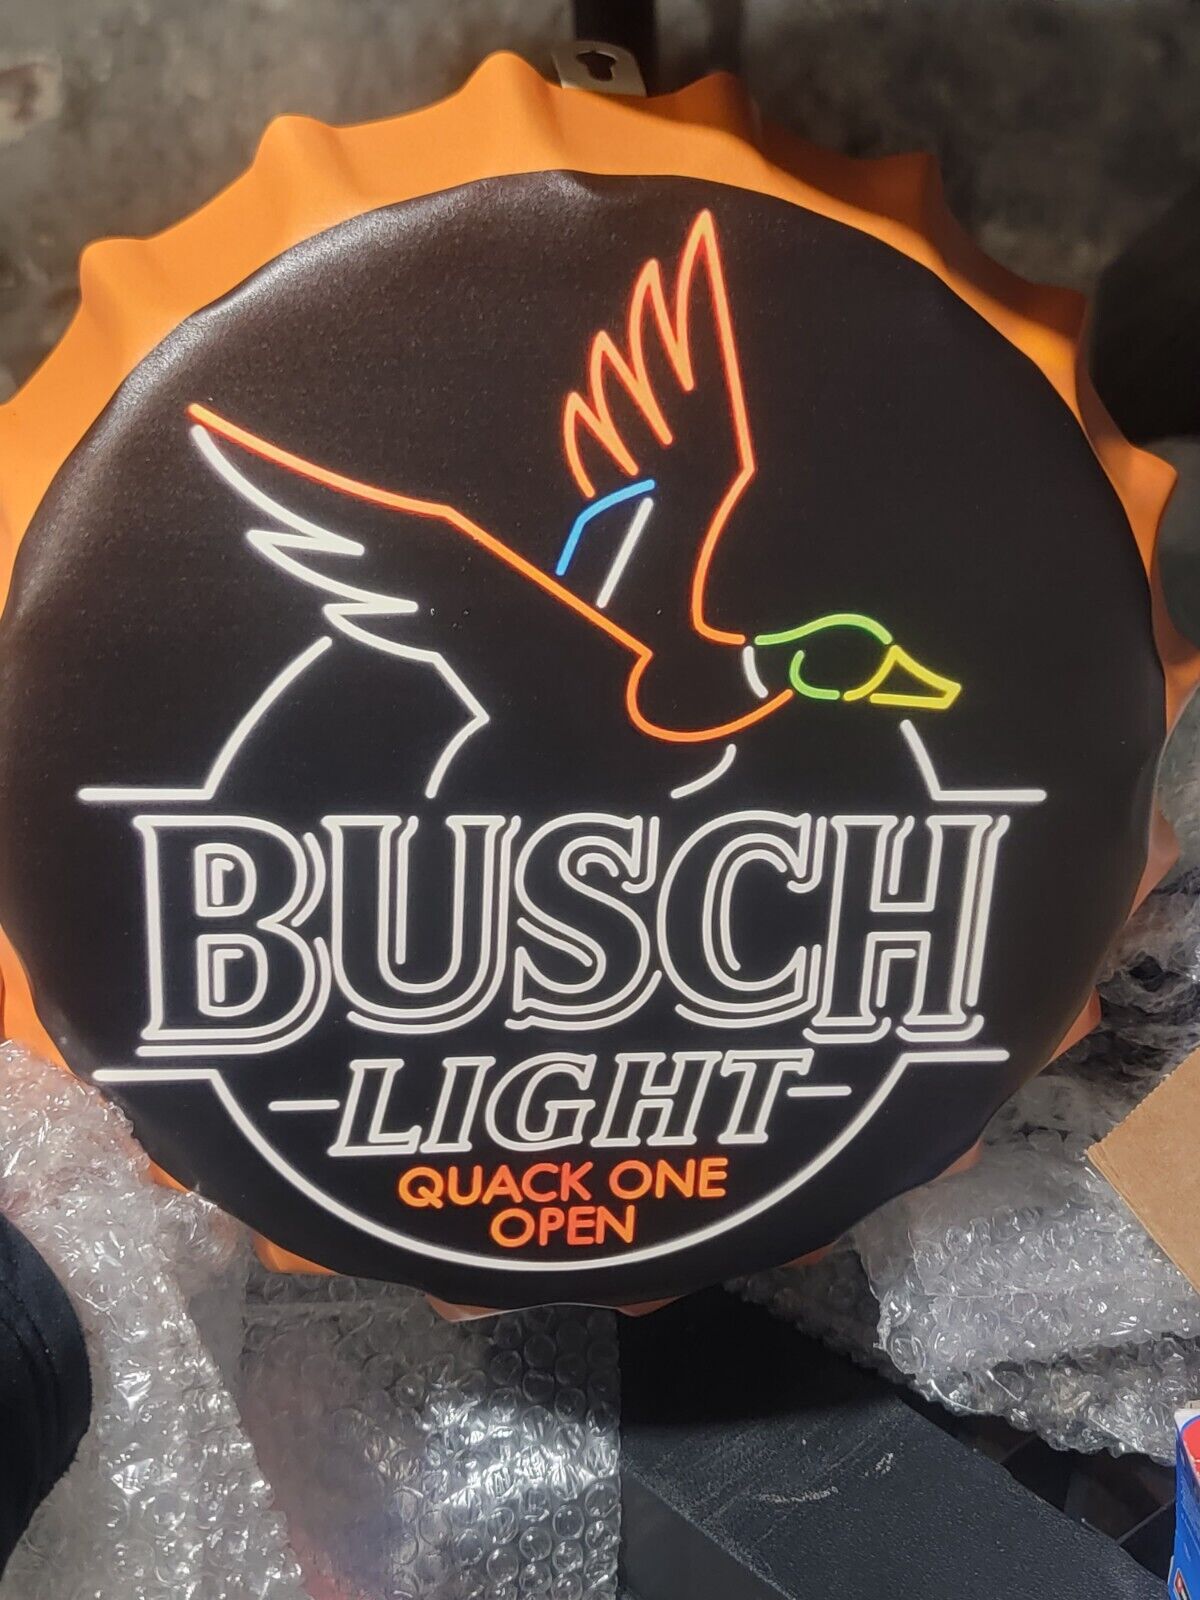 Busch light quack one open Large Bottle Cap Metal Beer Sign Man Cave Bar Decor 